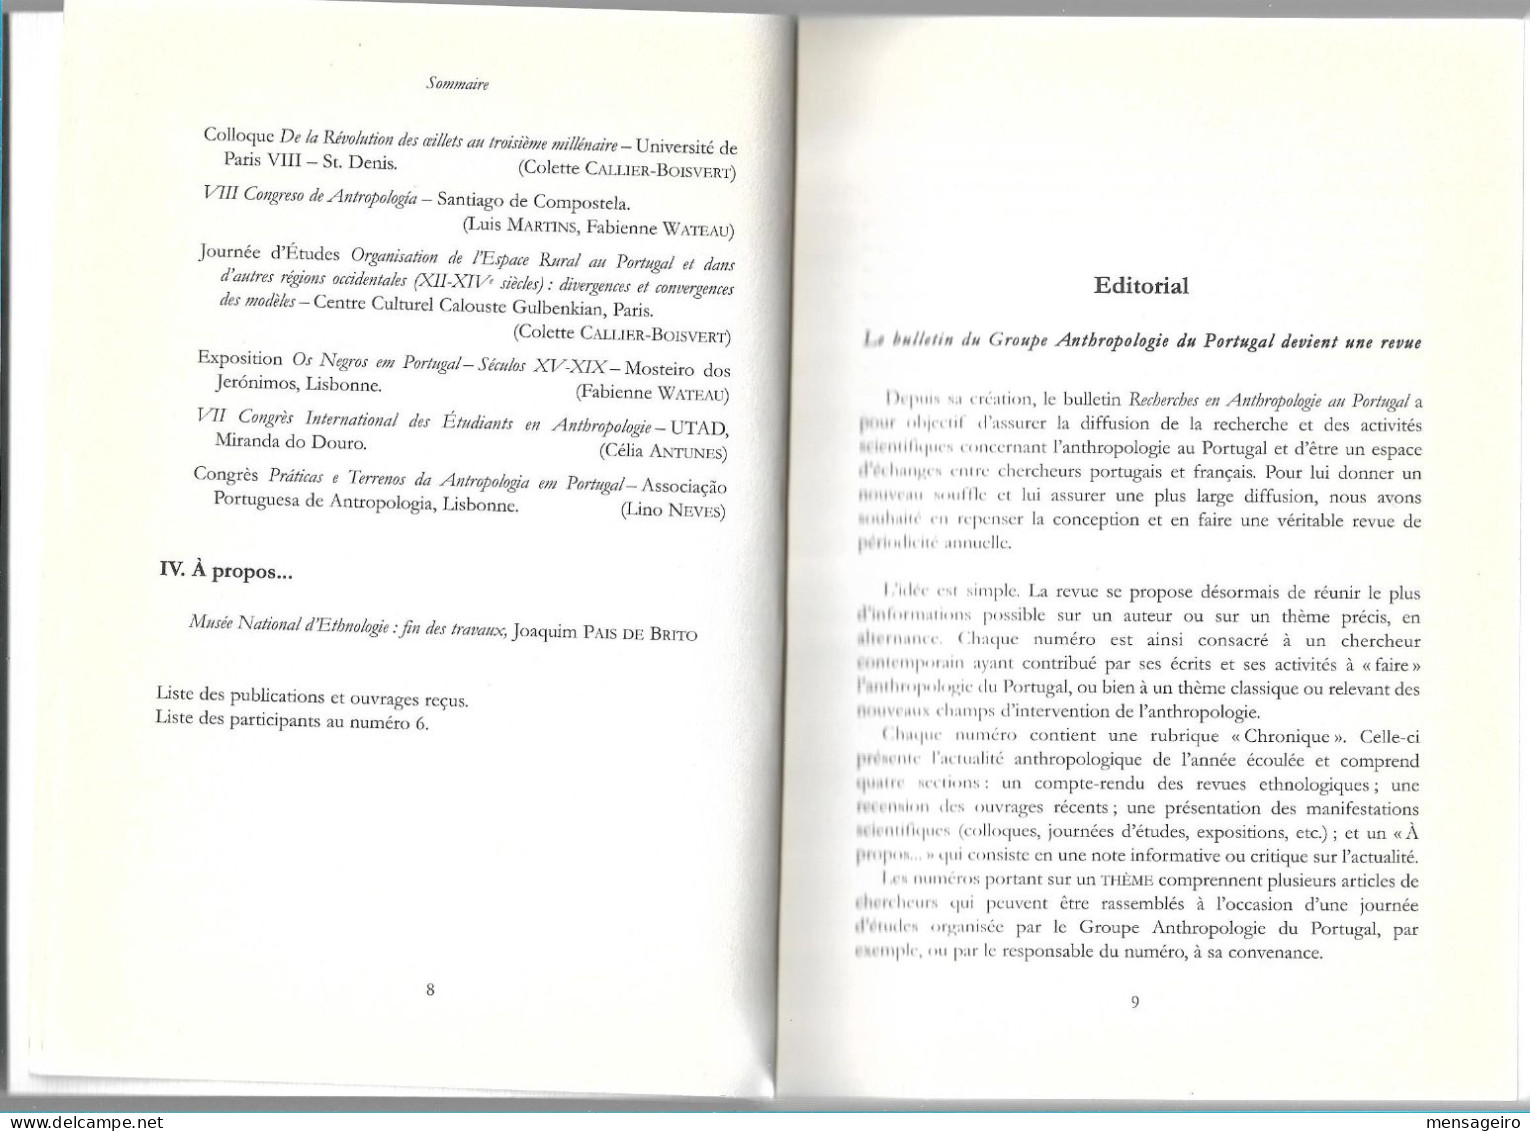 (LIV) – RECHERCHES EN ANTHROPOLOGIE AU PORTUGAL N°6 -2000 - Soziologie